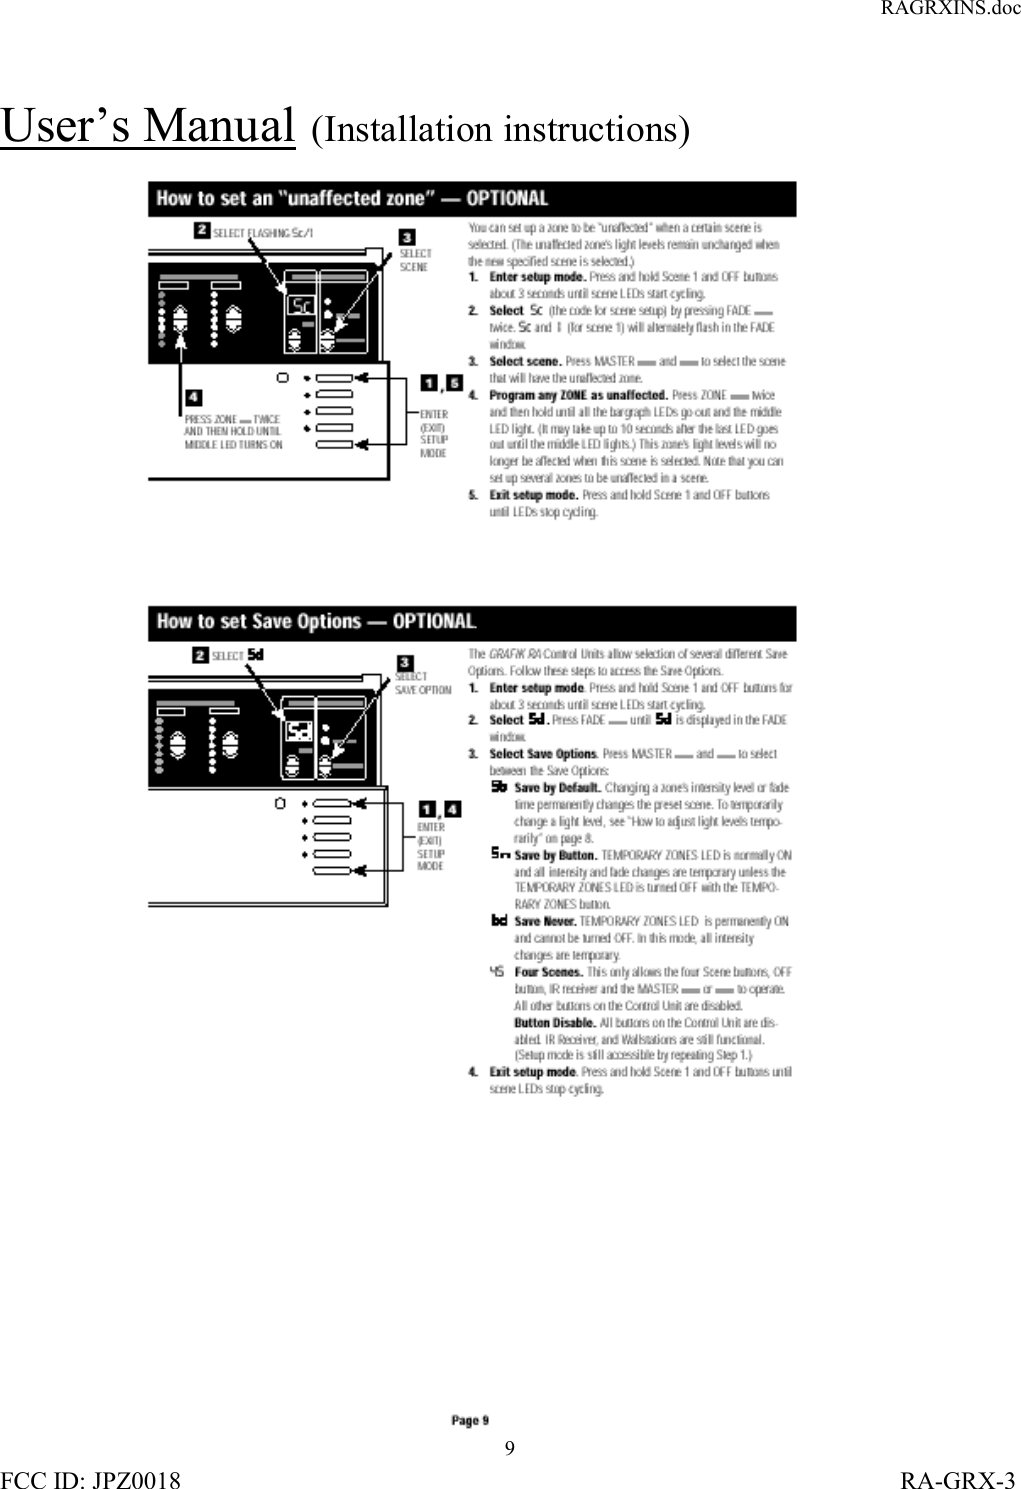 RAGRXINS.docFCC ID: JPZ0018                                                                                                                   RA-GRX-39User’s Manual  (Installation instructions)